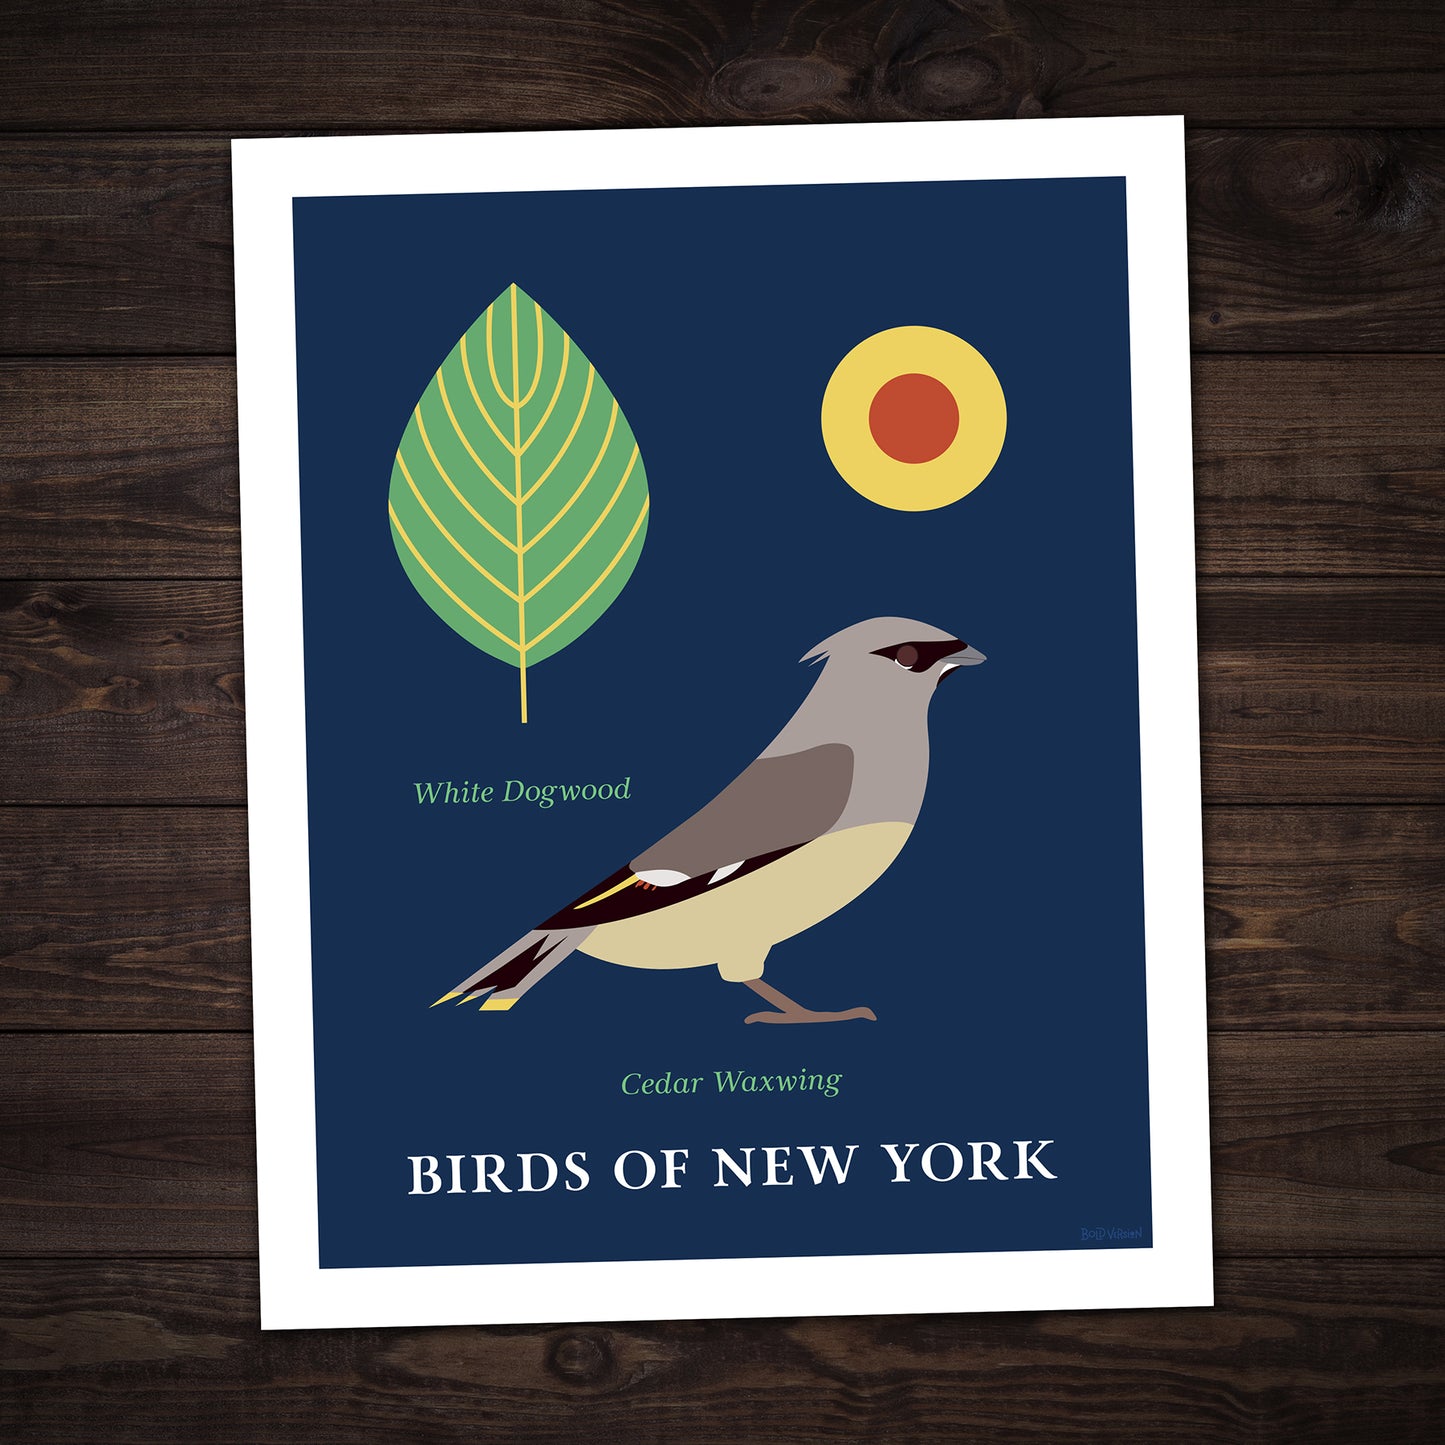 Cedar Waxwing - Birds of New York